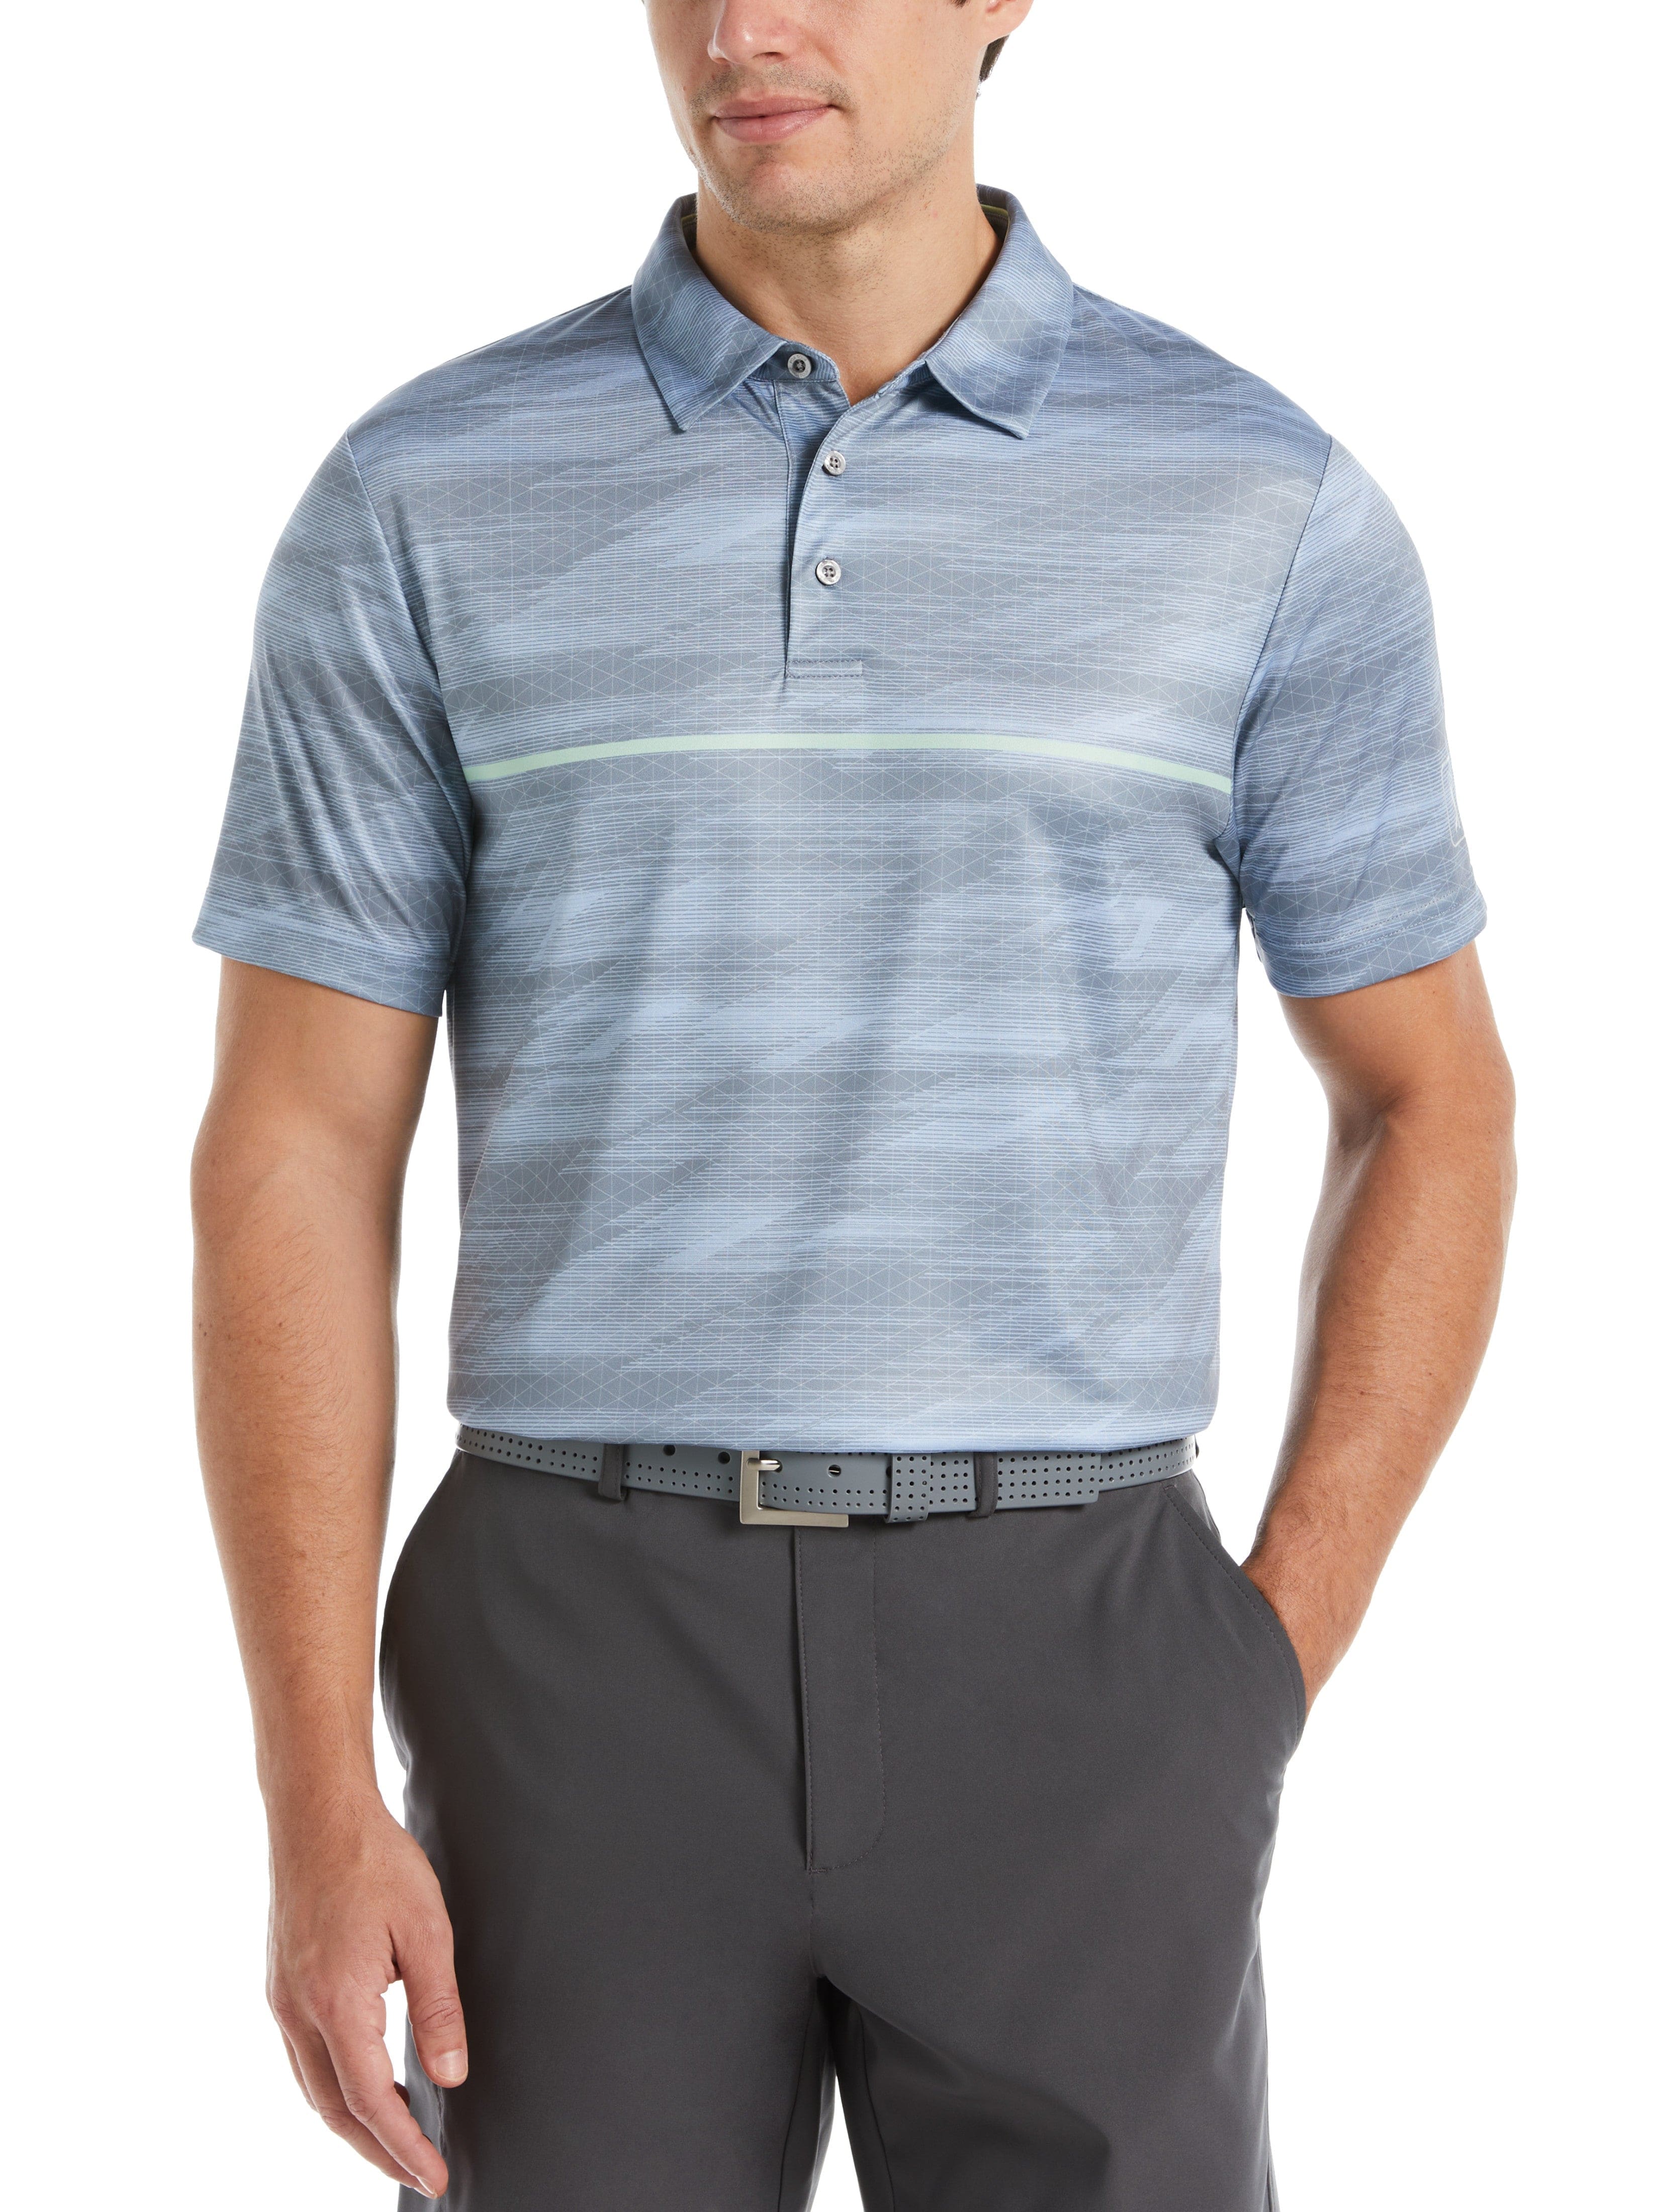 PGA TOUR Apparel Mens Digitized Chest Stripe Print Golf Polo Shirt, Size 2XL, Tradewinds Gray, 100% Polyester | Golf Apparel Shop